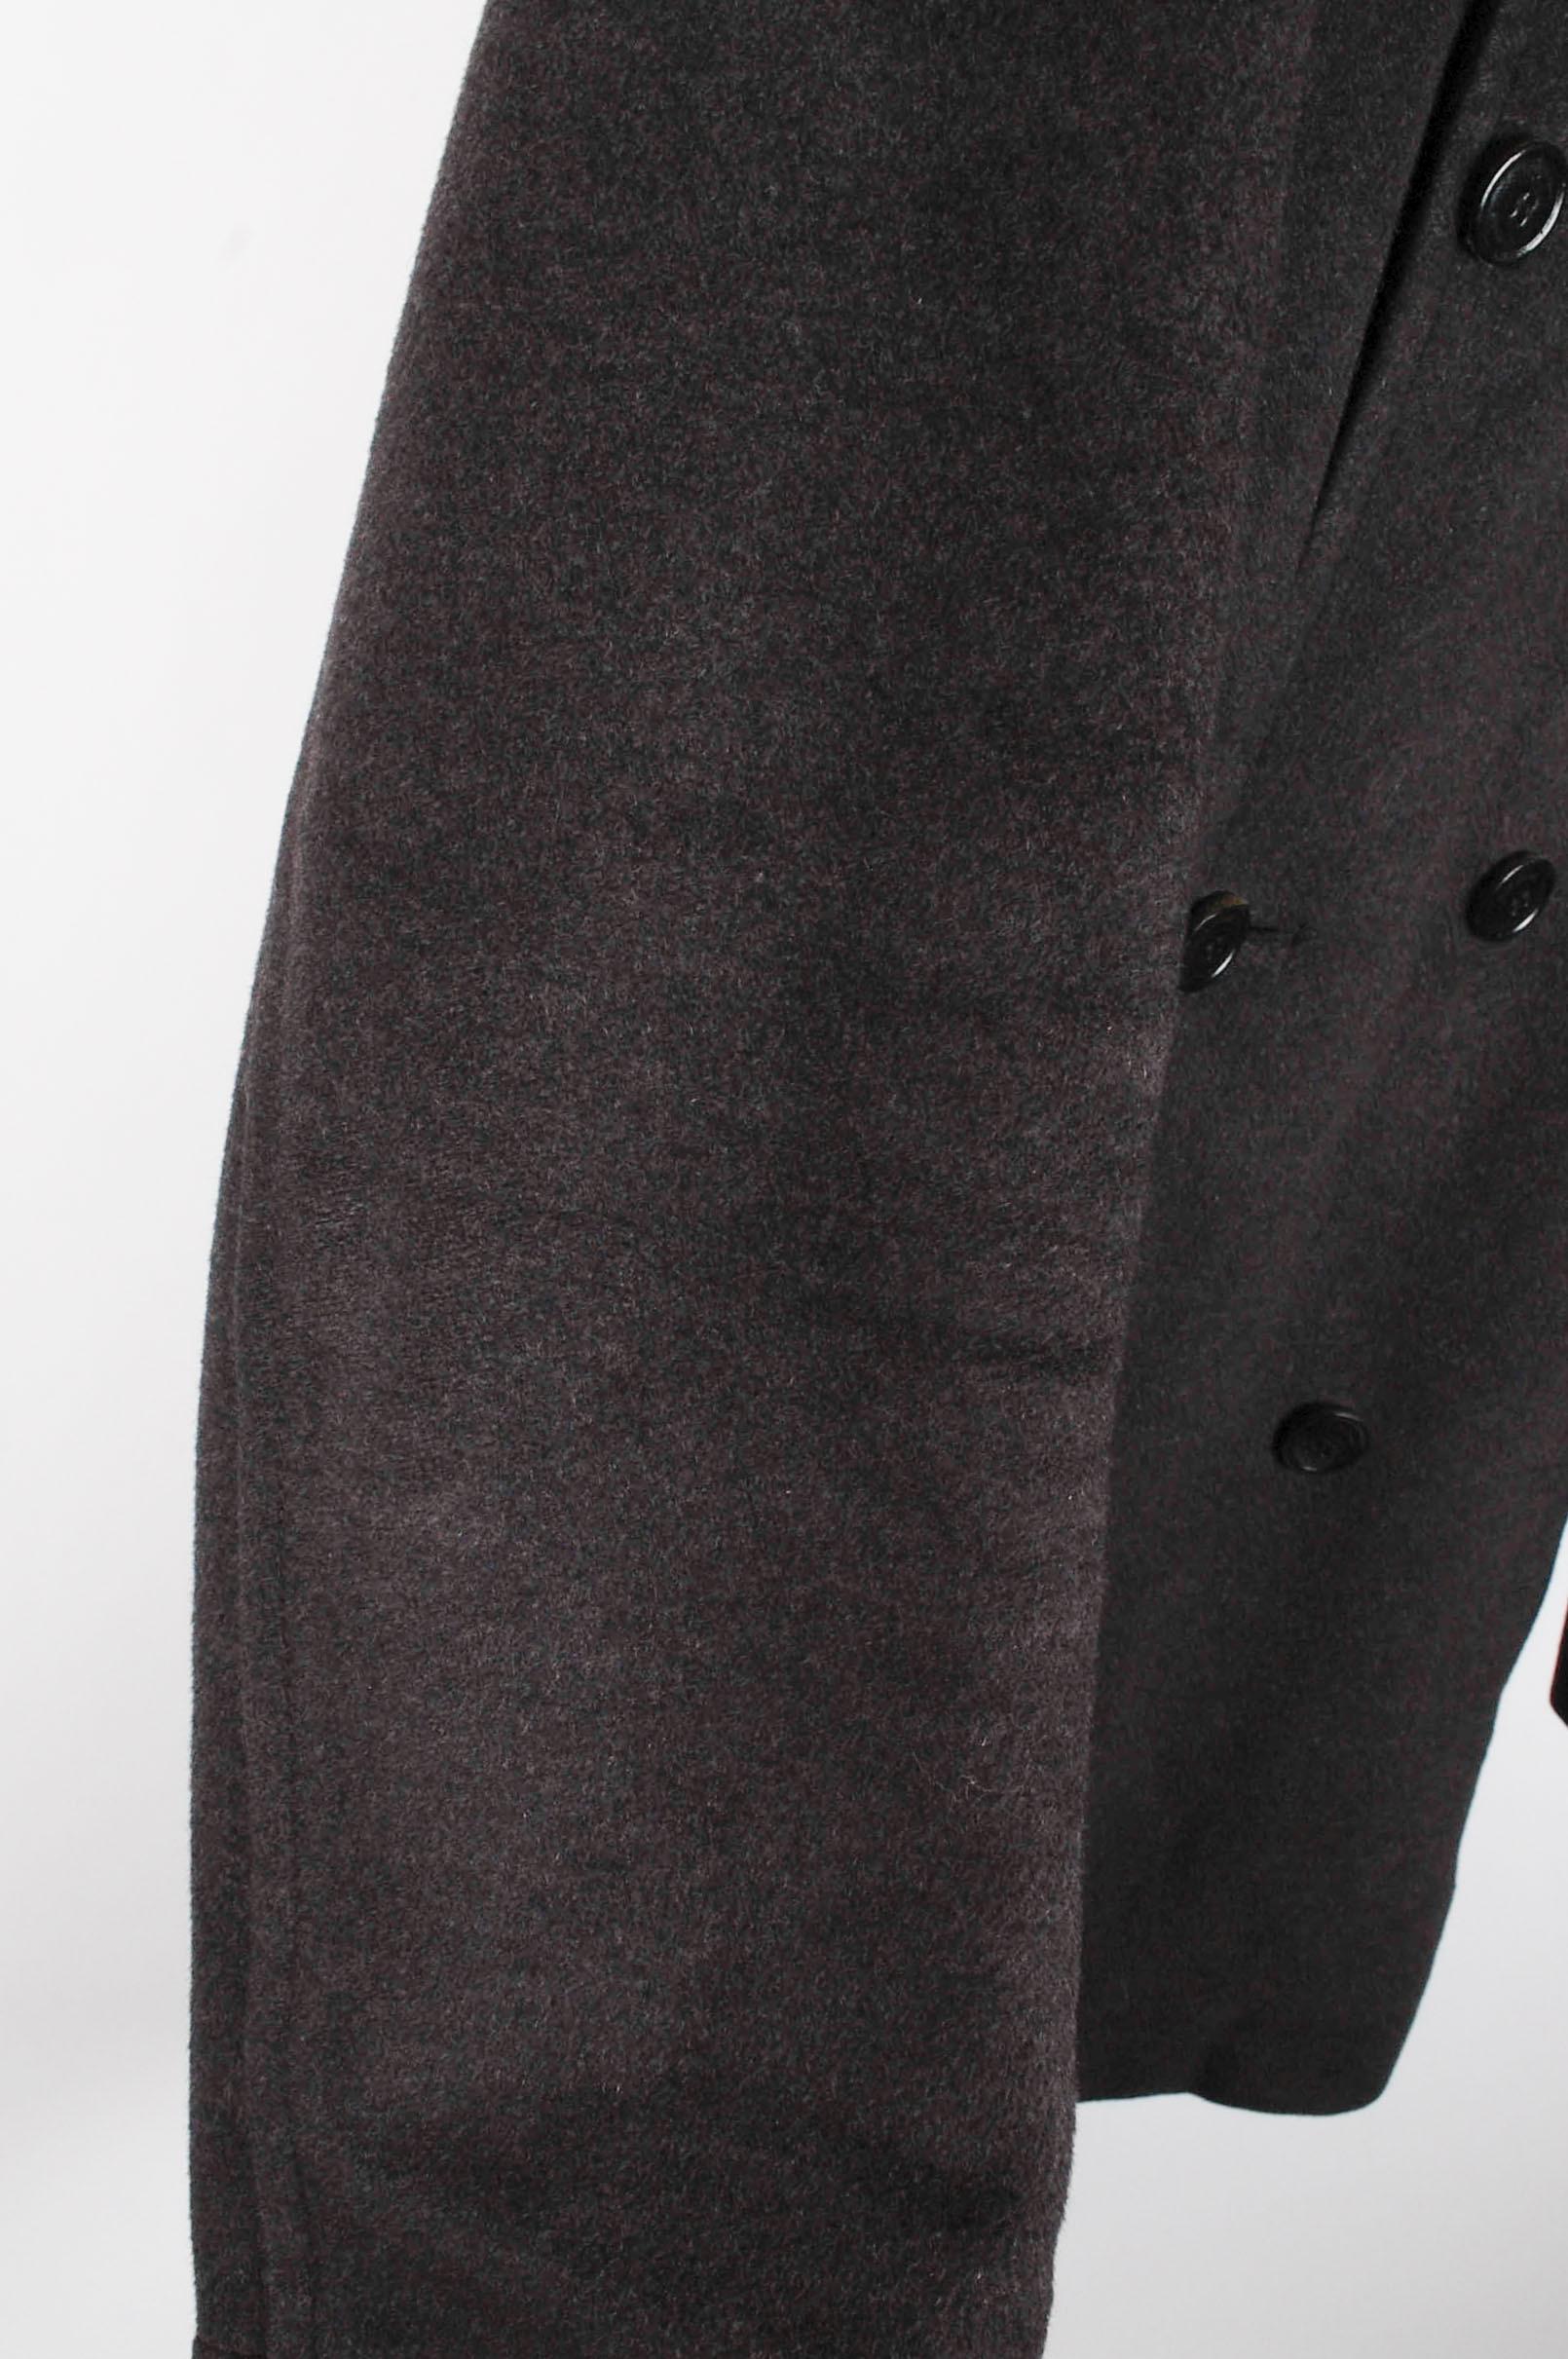 Dior Homme Hedi Slimane Leather Details Peacoat Men Coat Size 48IT (M/L) 1